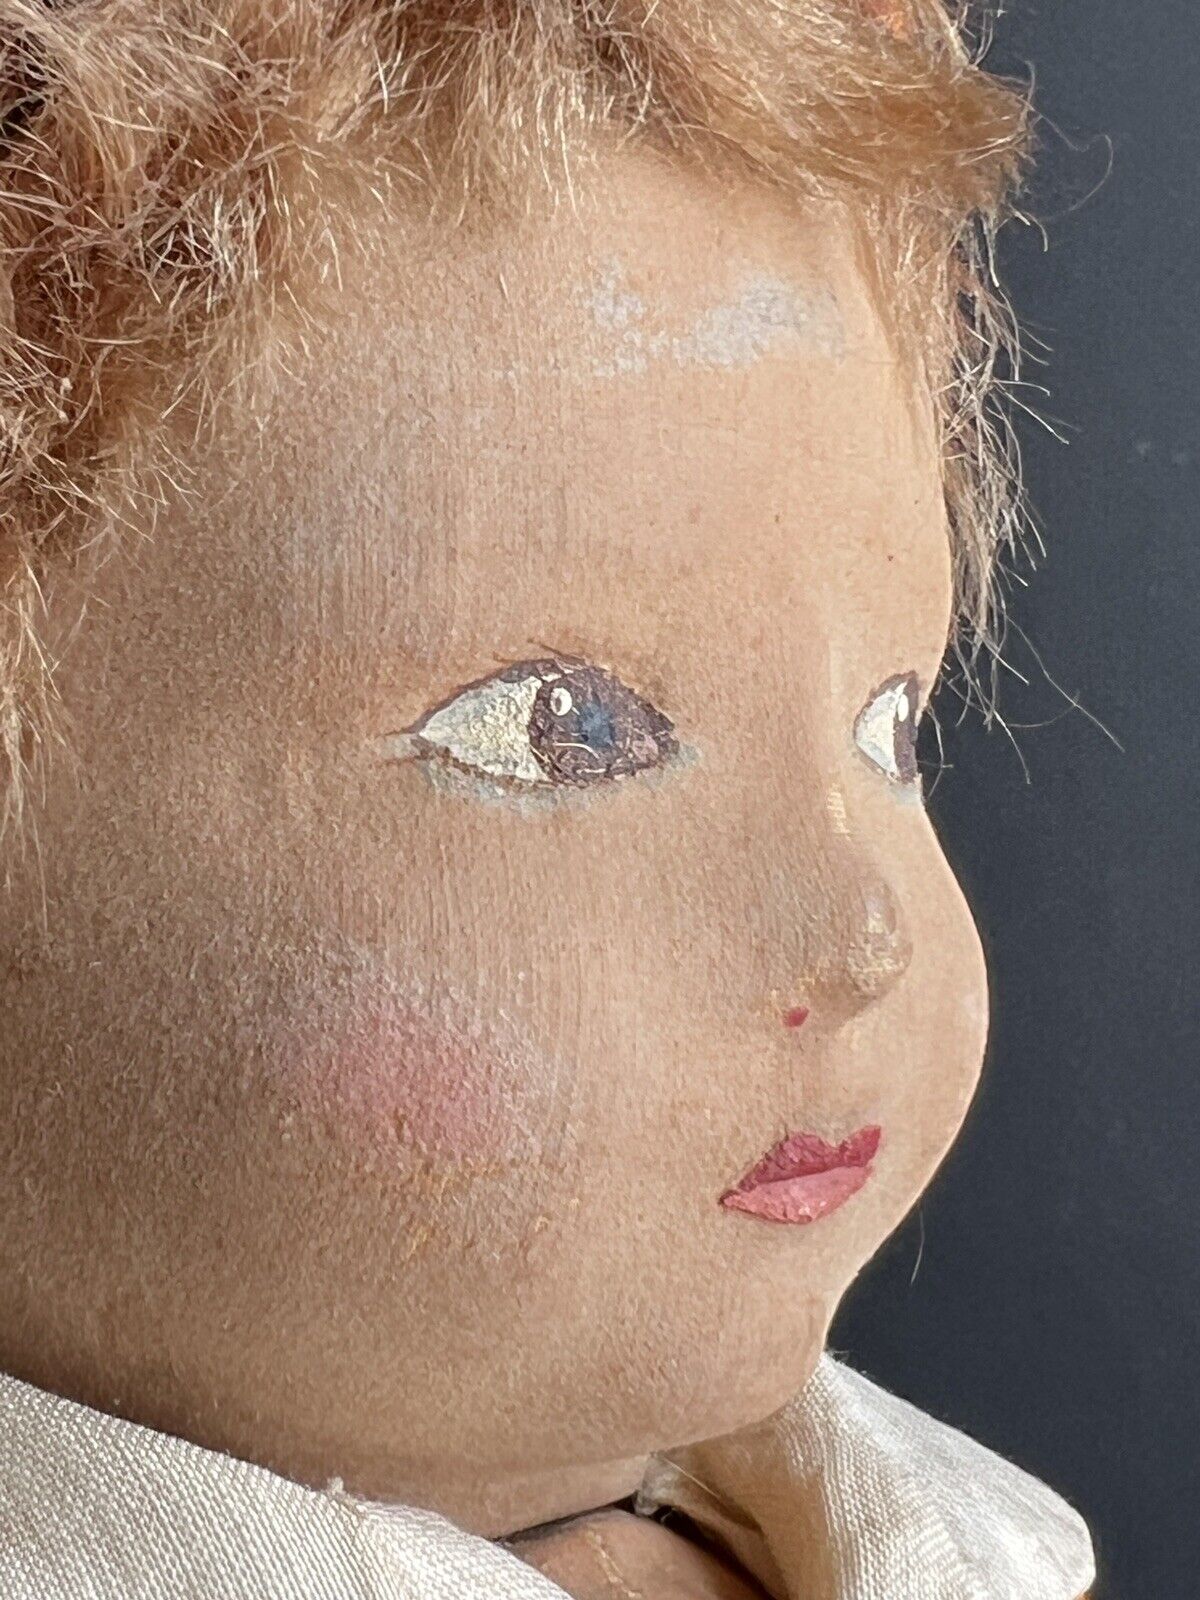 Antique English Early Cloth Chad Valley Boy Doll with Original Tag Felt Clothes